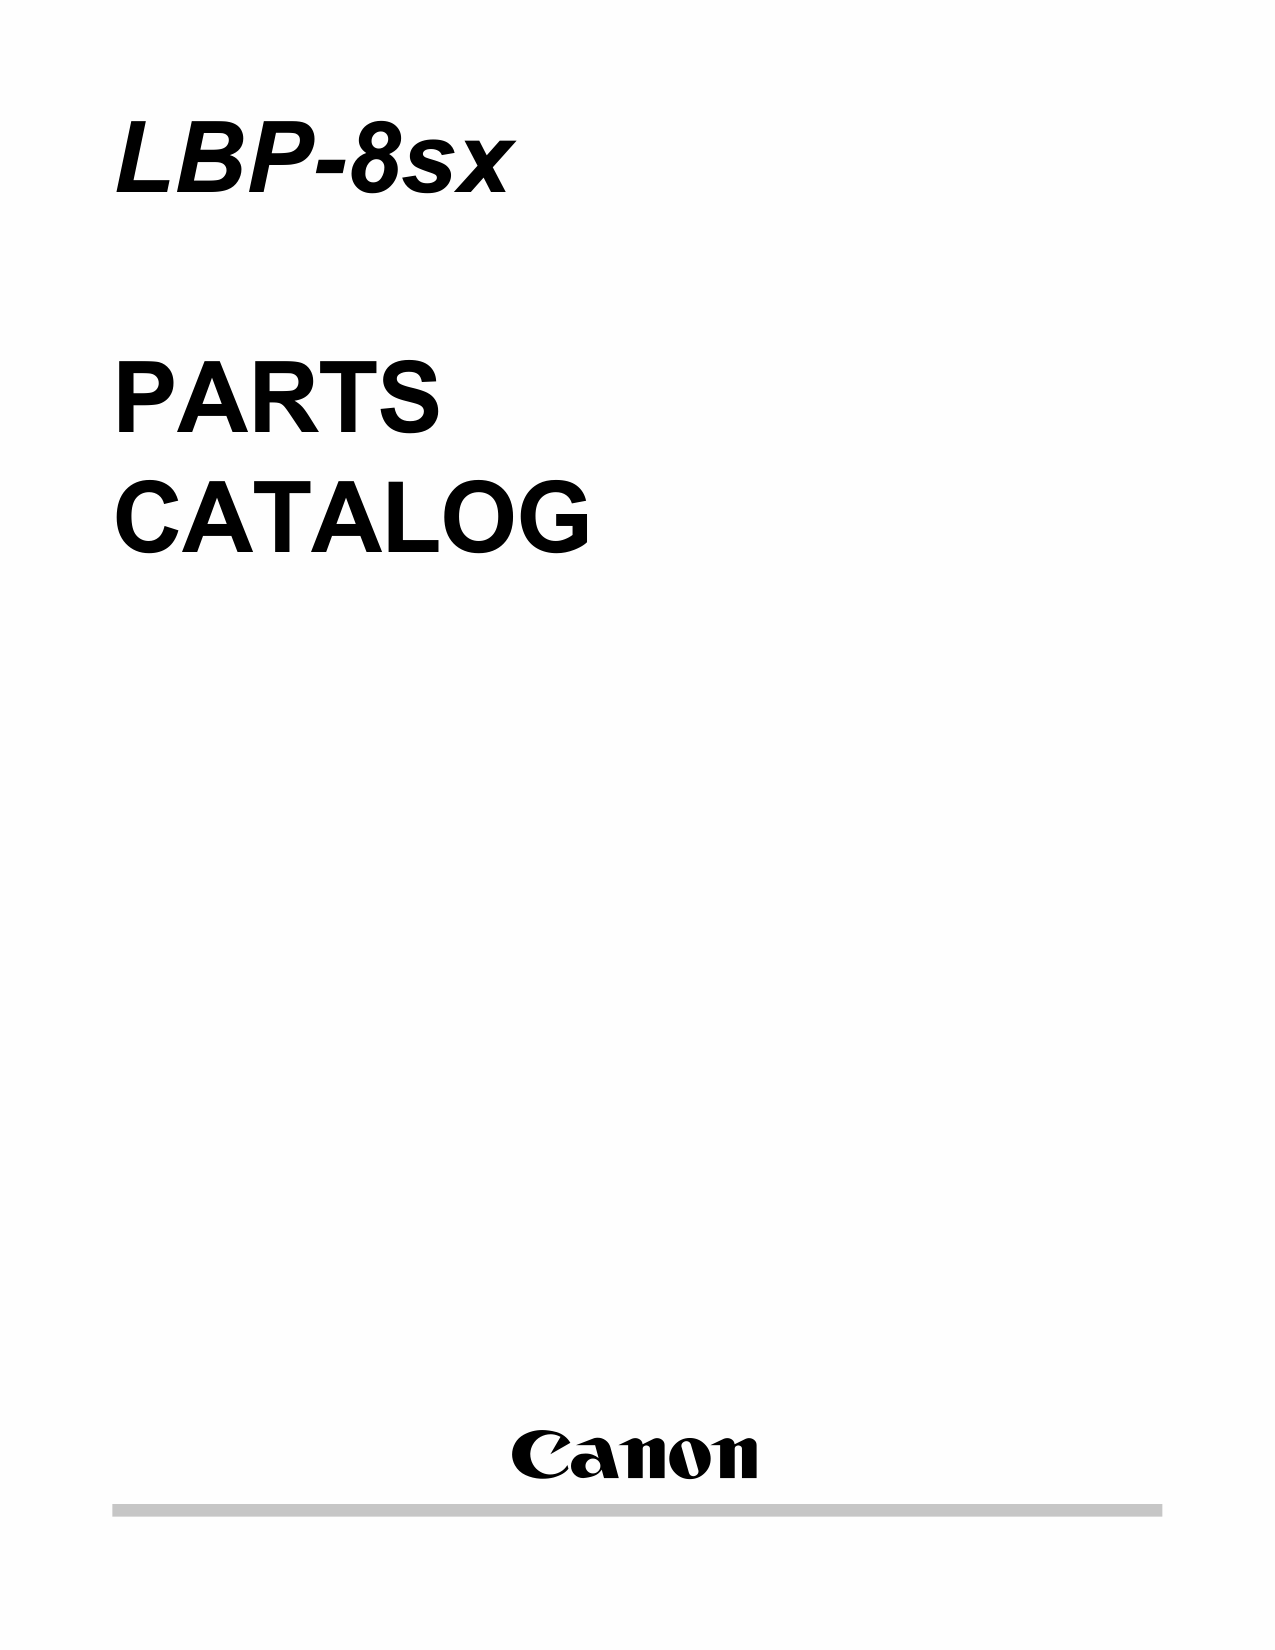 Canon imageCLASS LBP-8sx Parts Catalog Manual-1